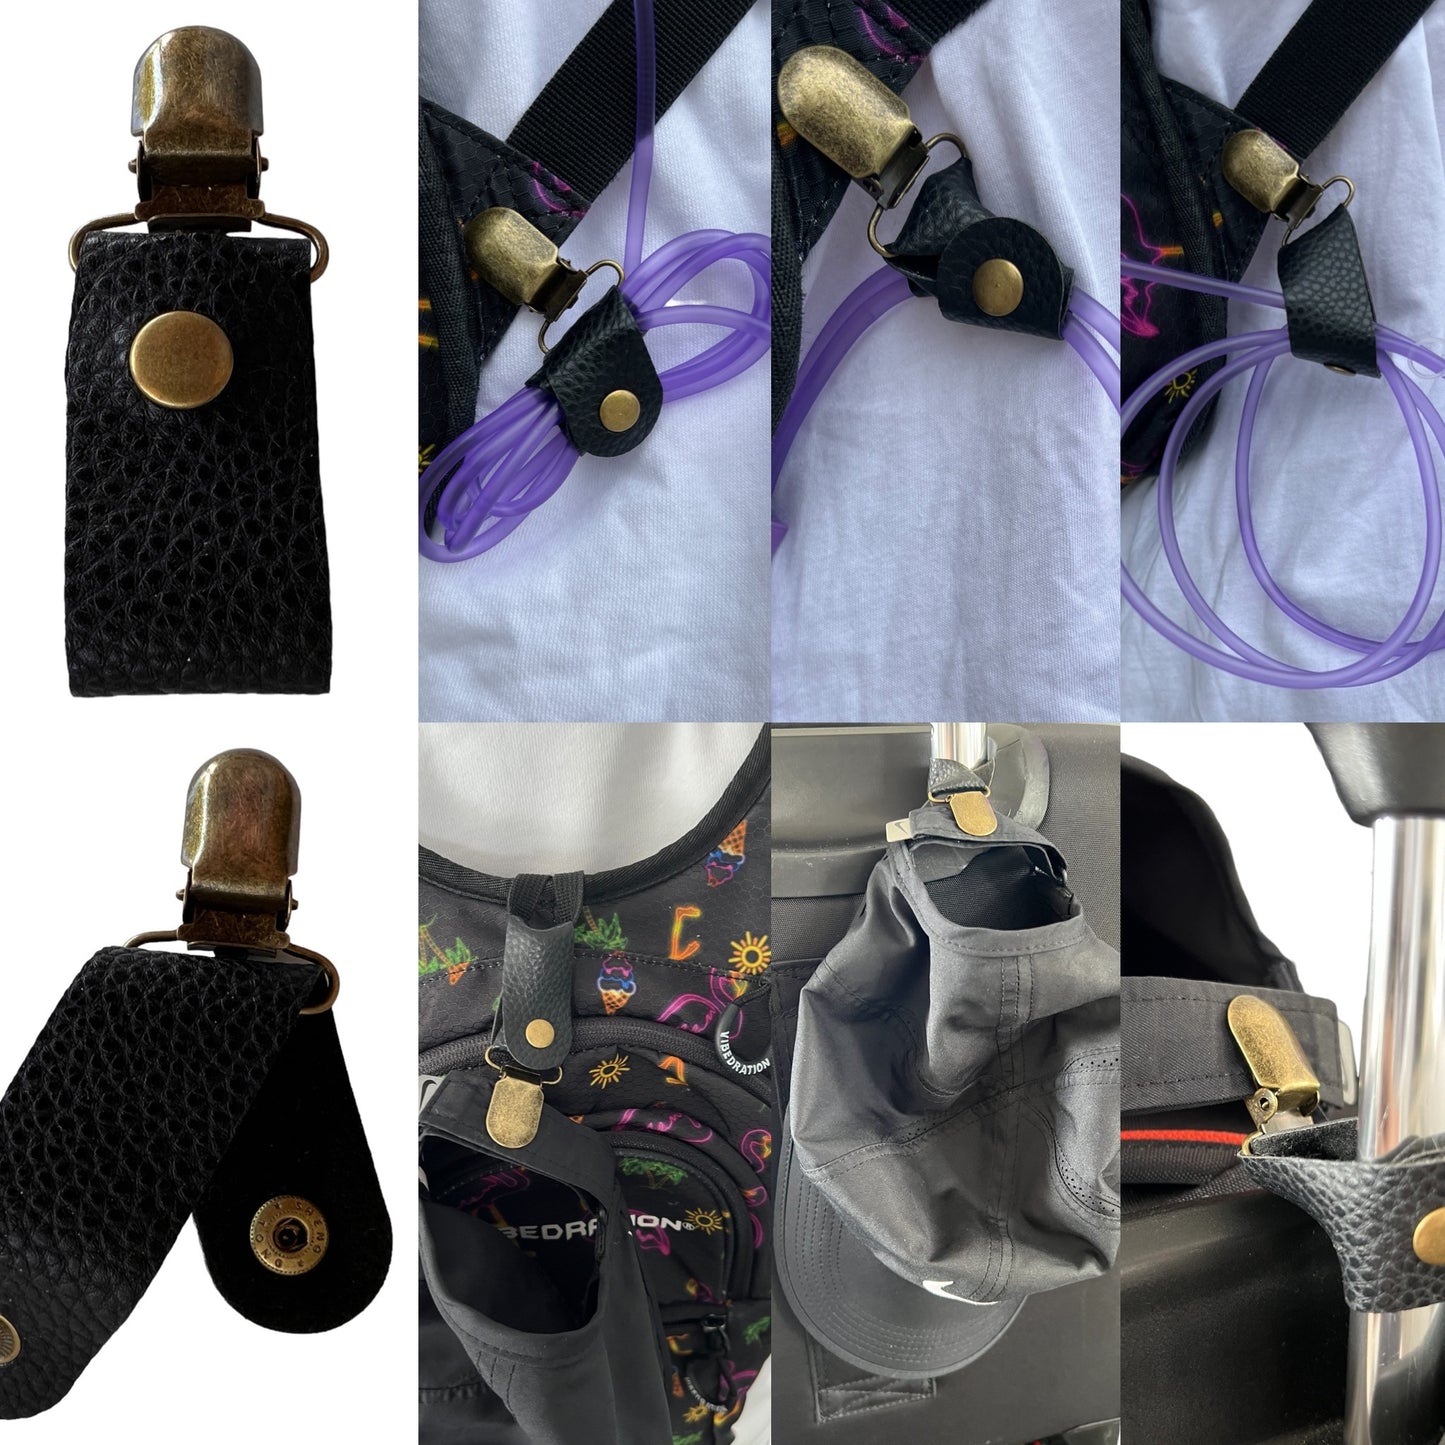 Leather Tubie Clip / Handbag Accessory  SPIRIT SPARKPLUGS   